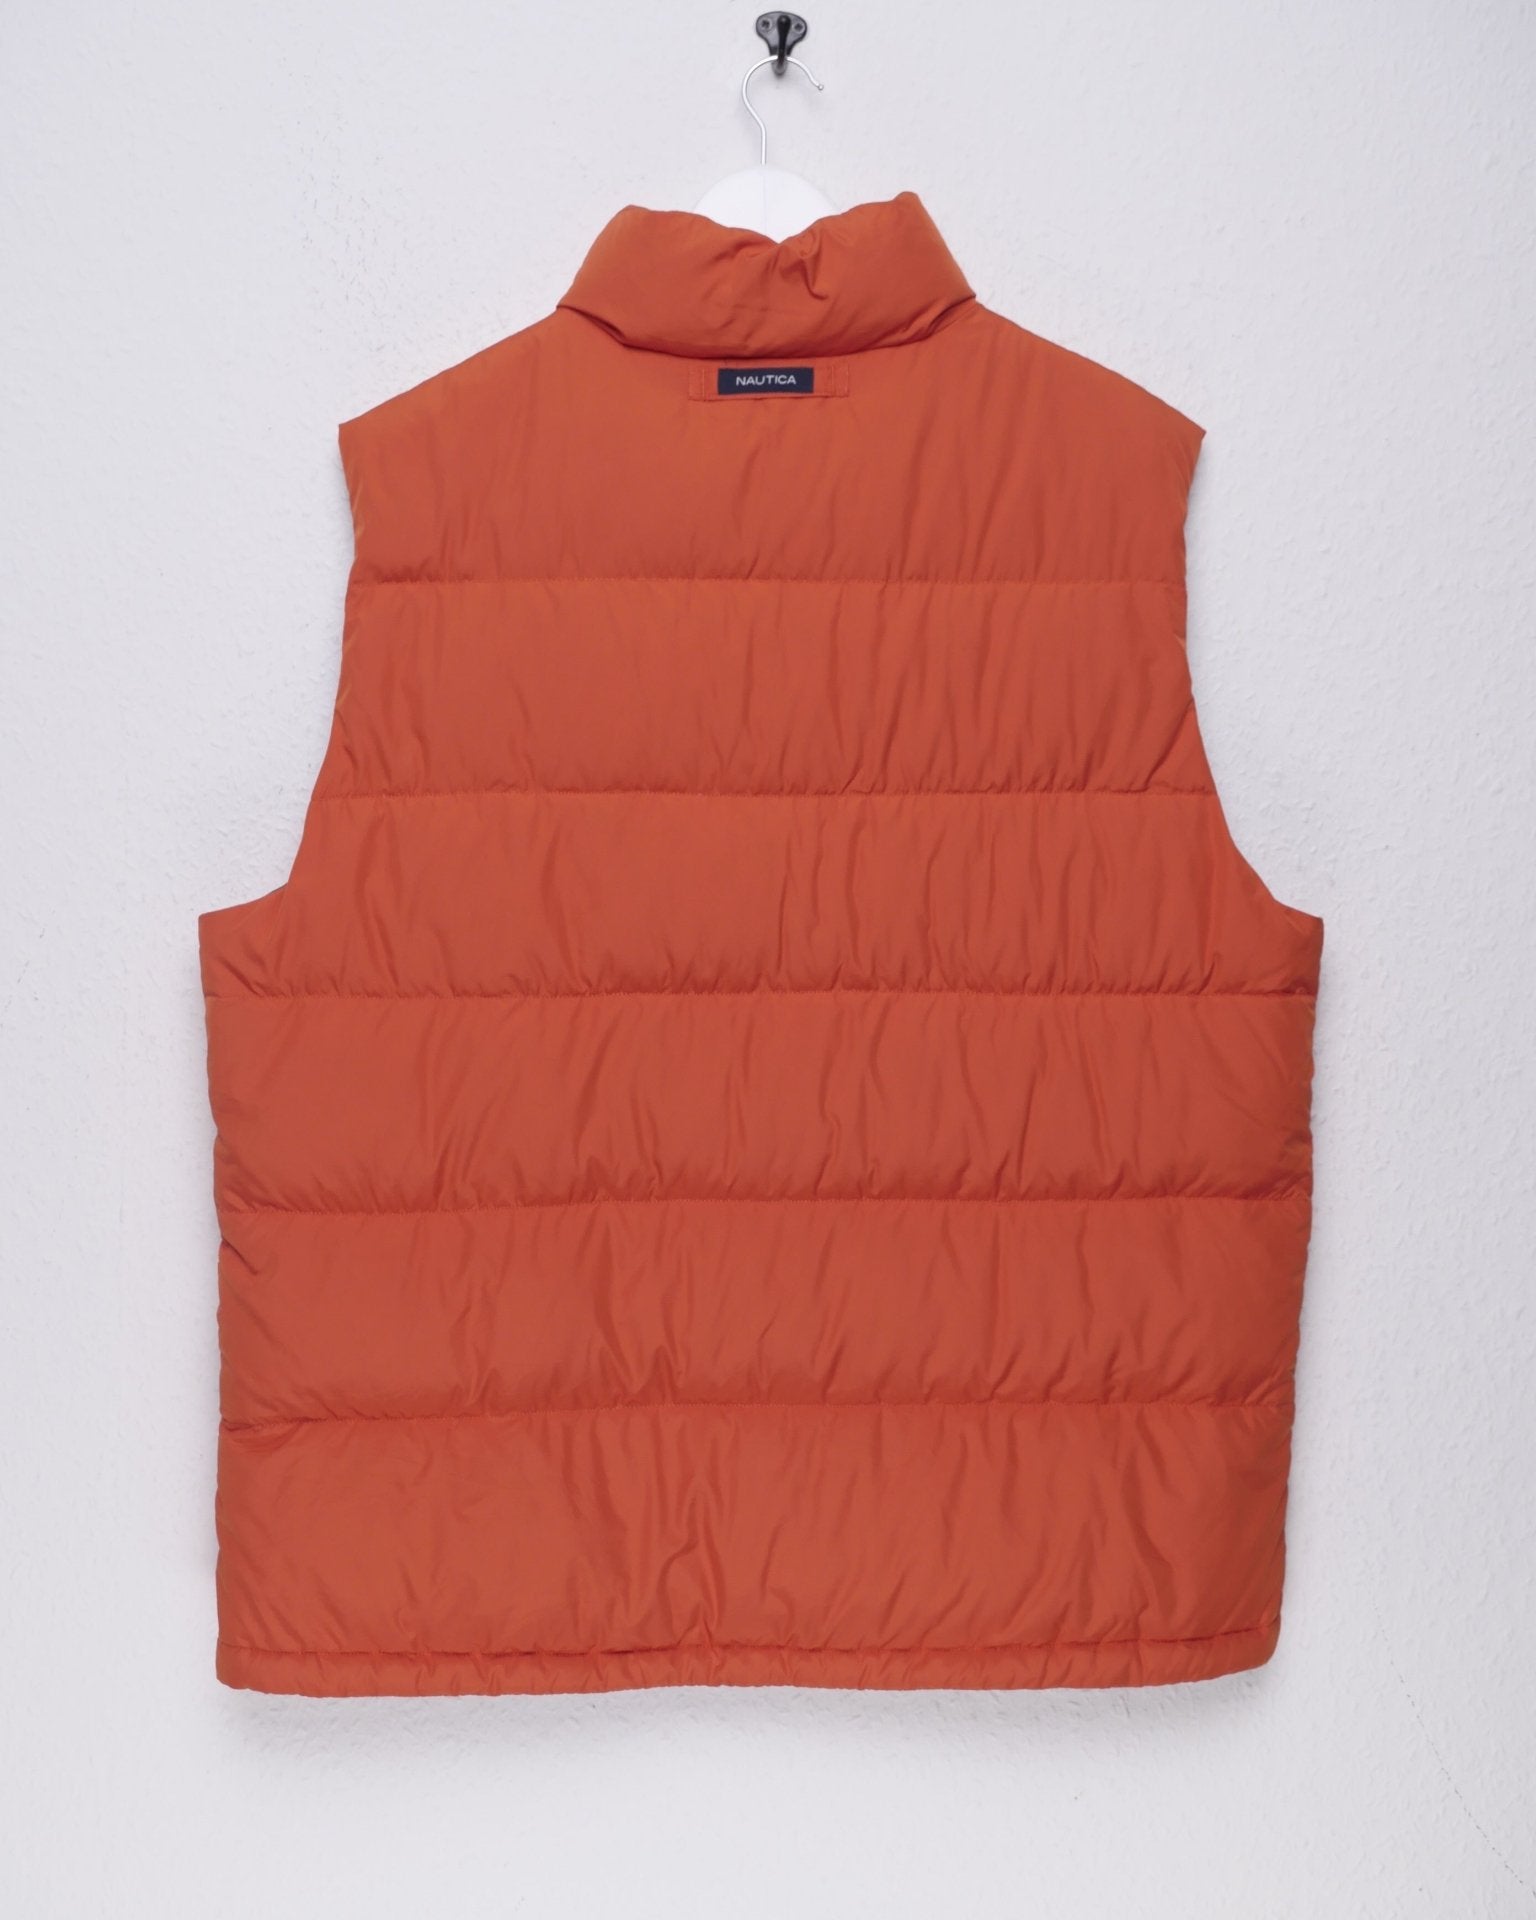 Nautica patched Logo orange puffered Vest Jacket - Peeces